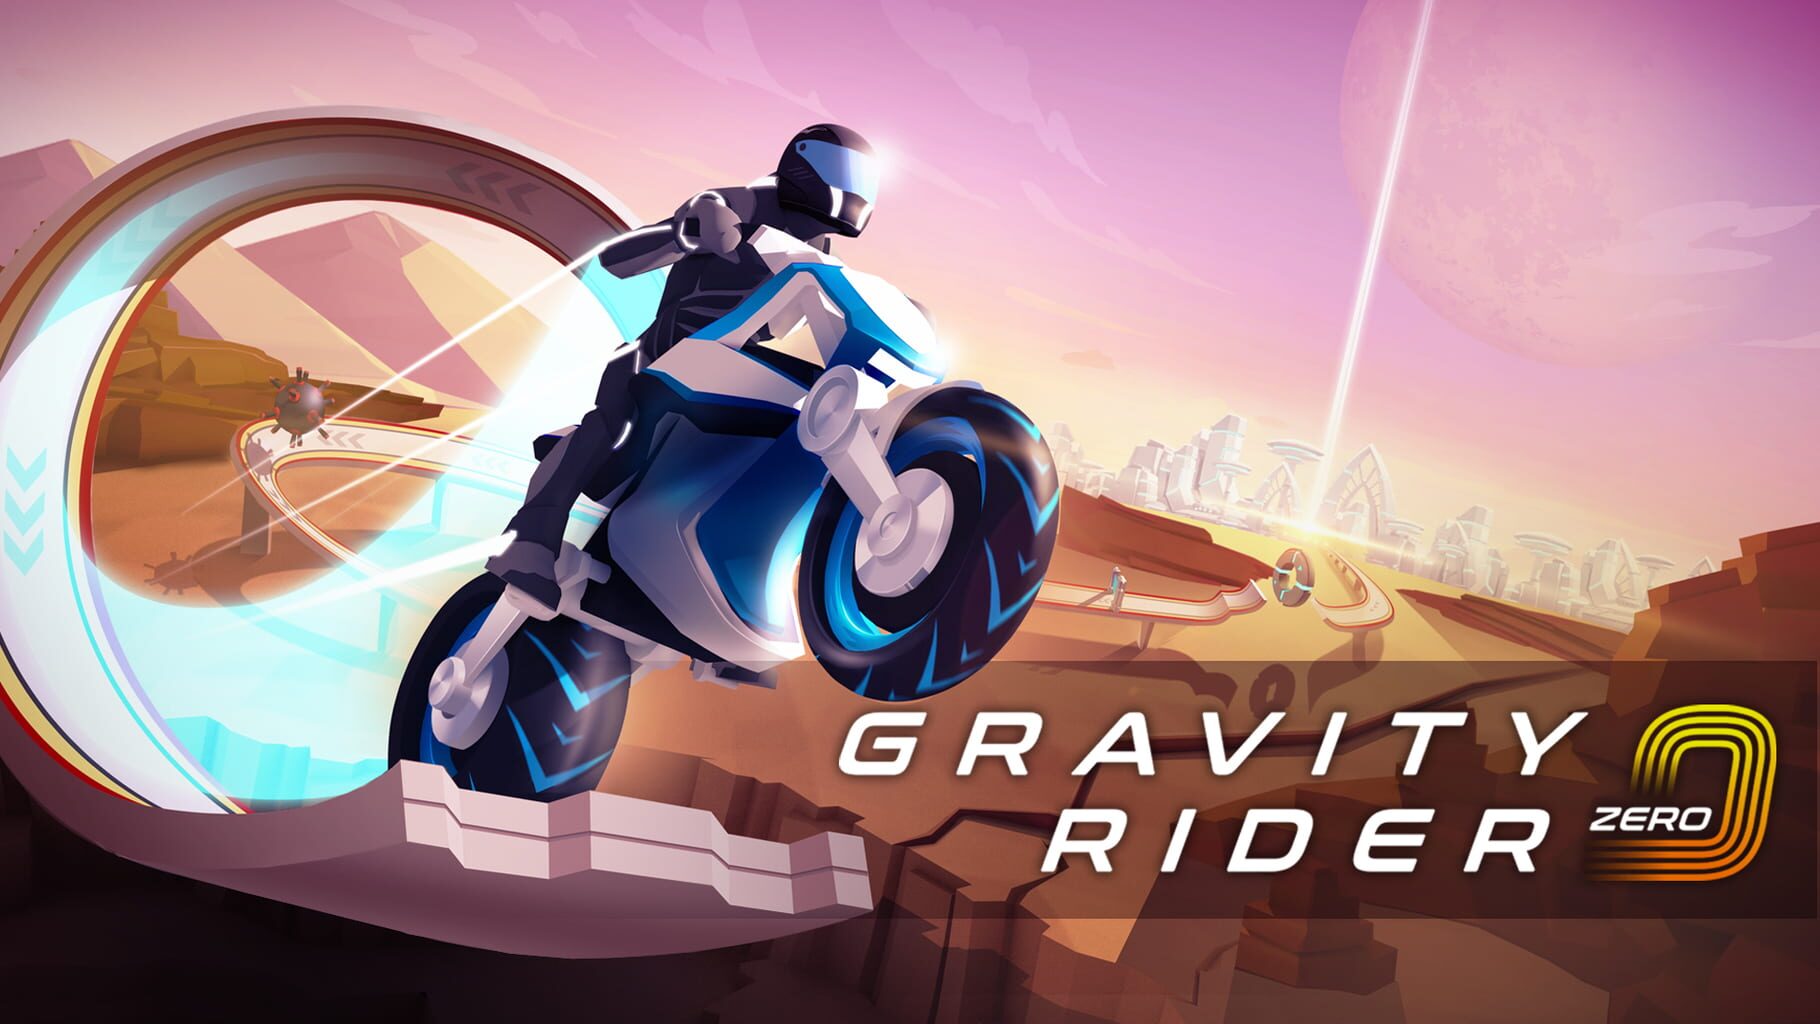 Gravity Rider Zero artwork